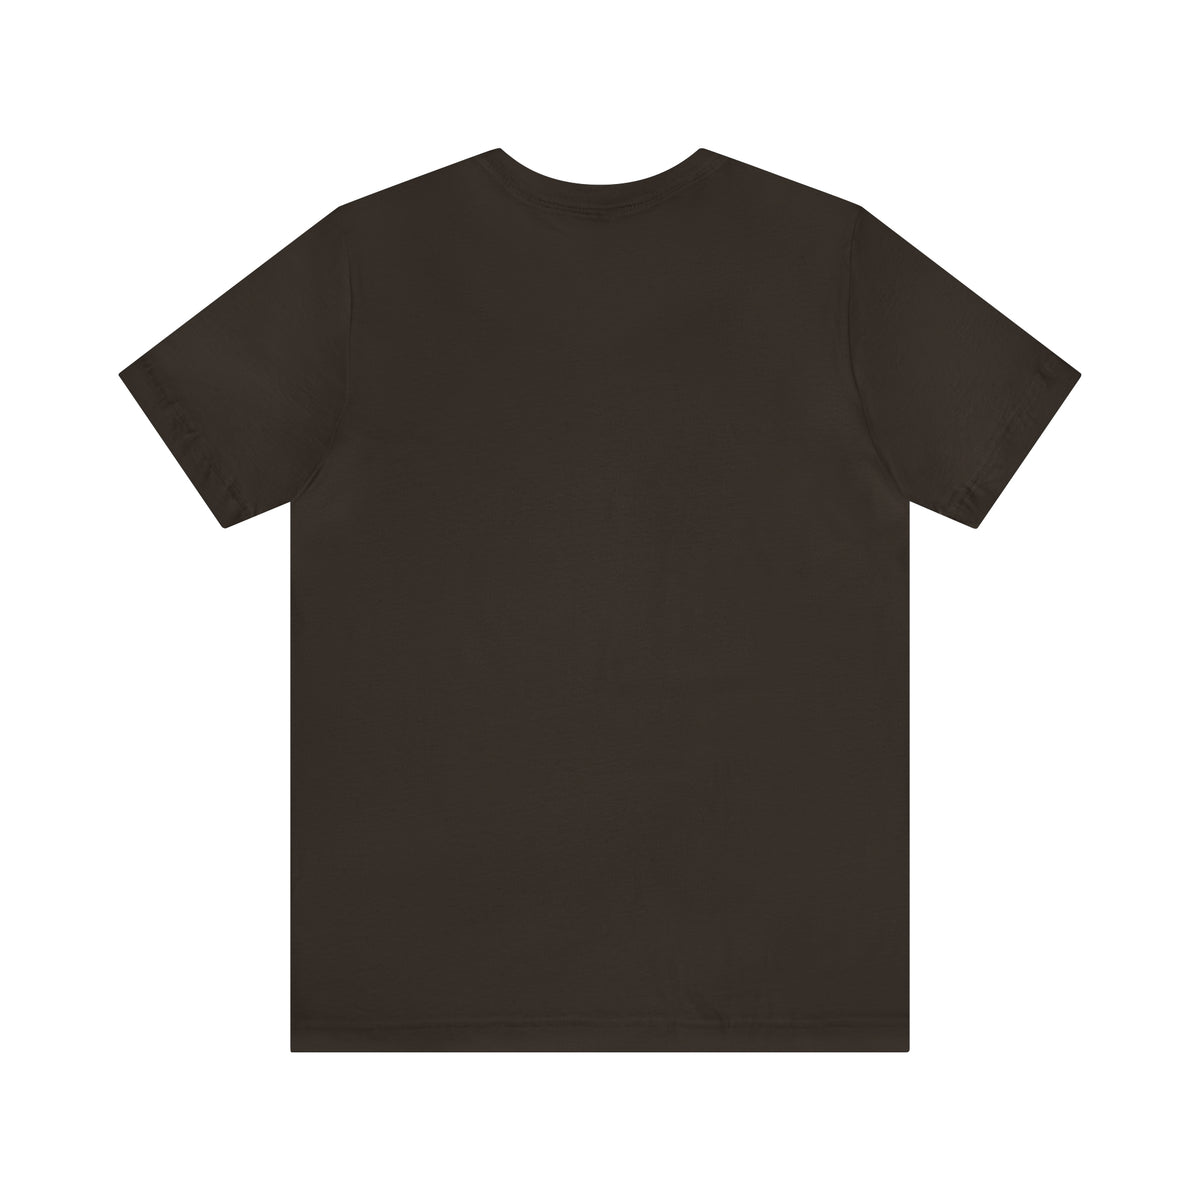 The Centaur Unisex T-Shirt